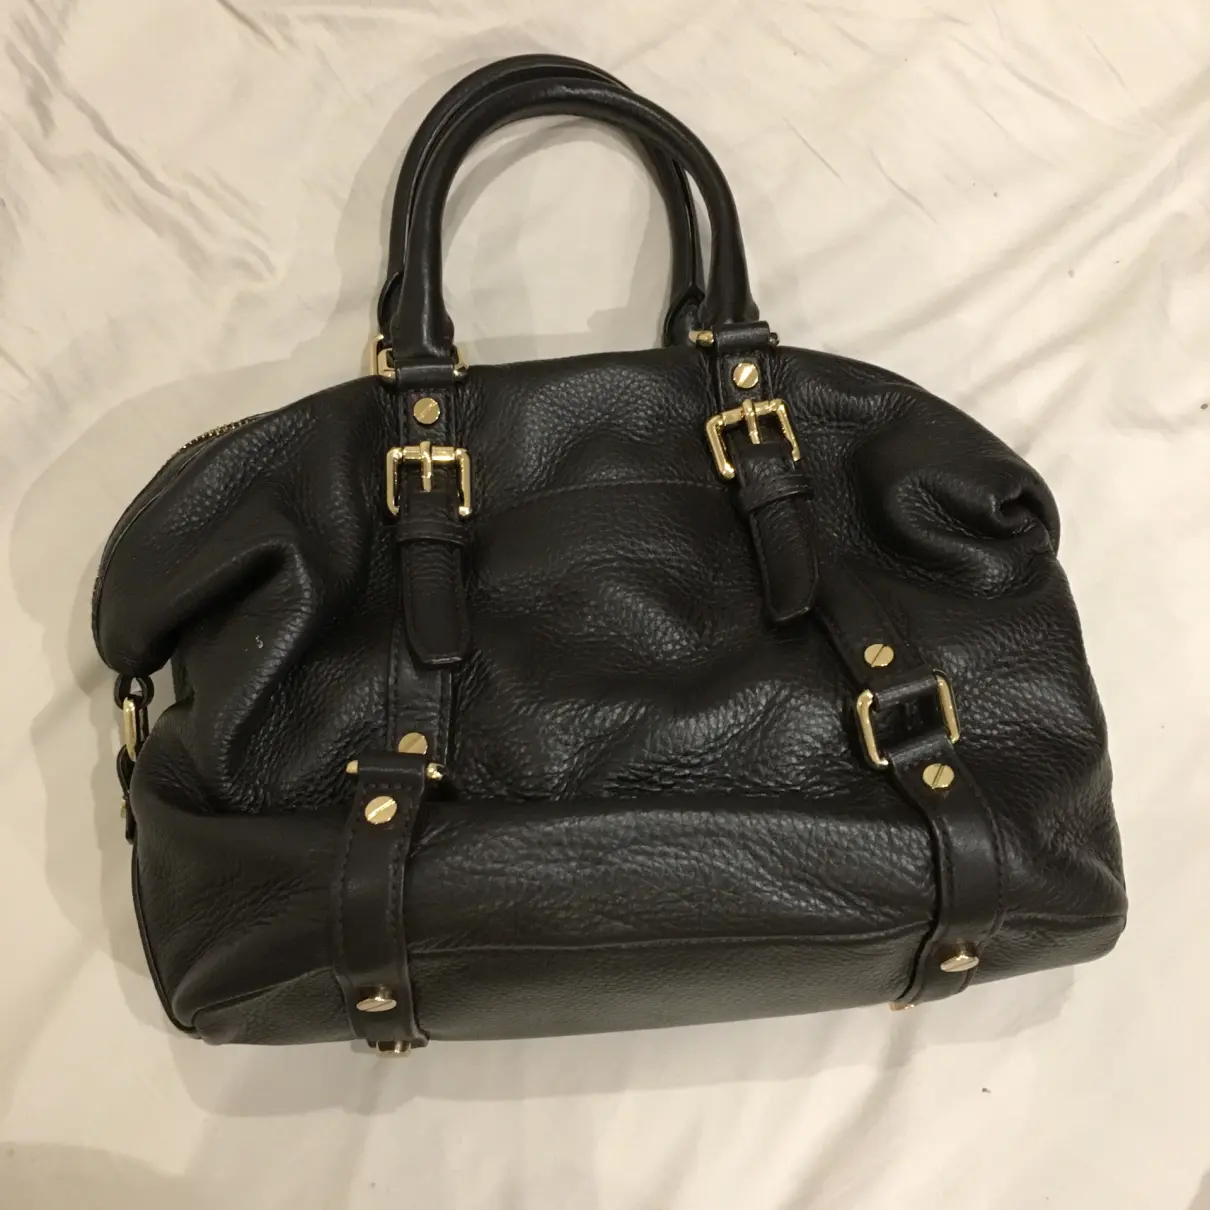 Buy Michael Kors Bedford leather handbag online